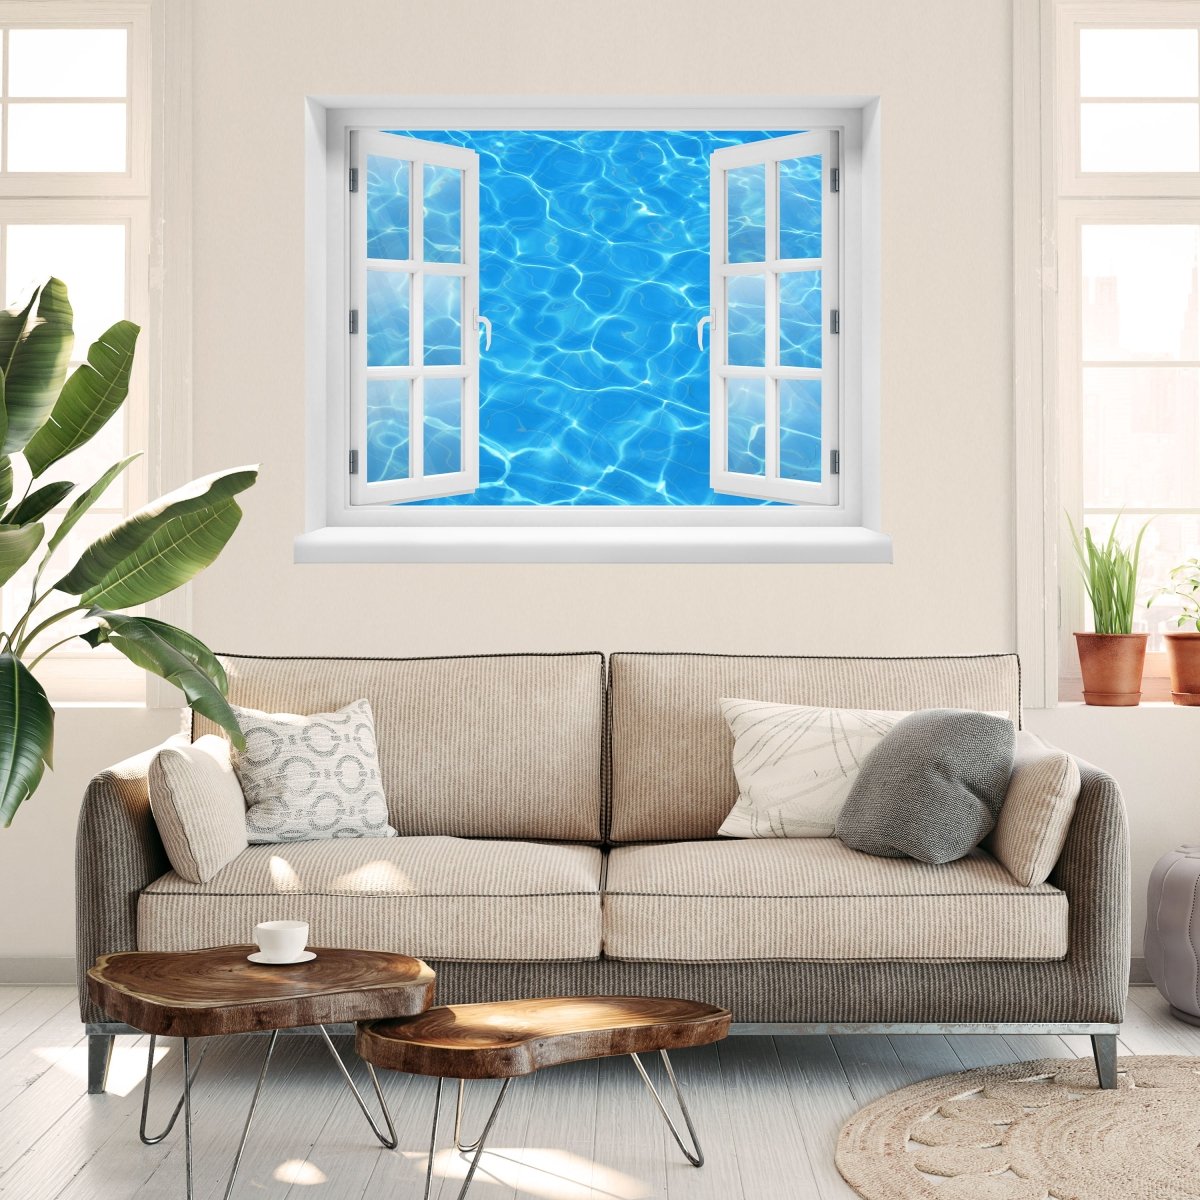 3D wall sticker water pool light effect - Wall Decal M1010